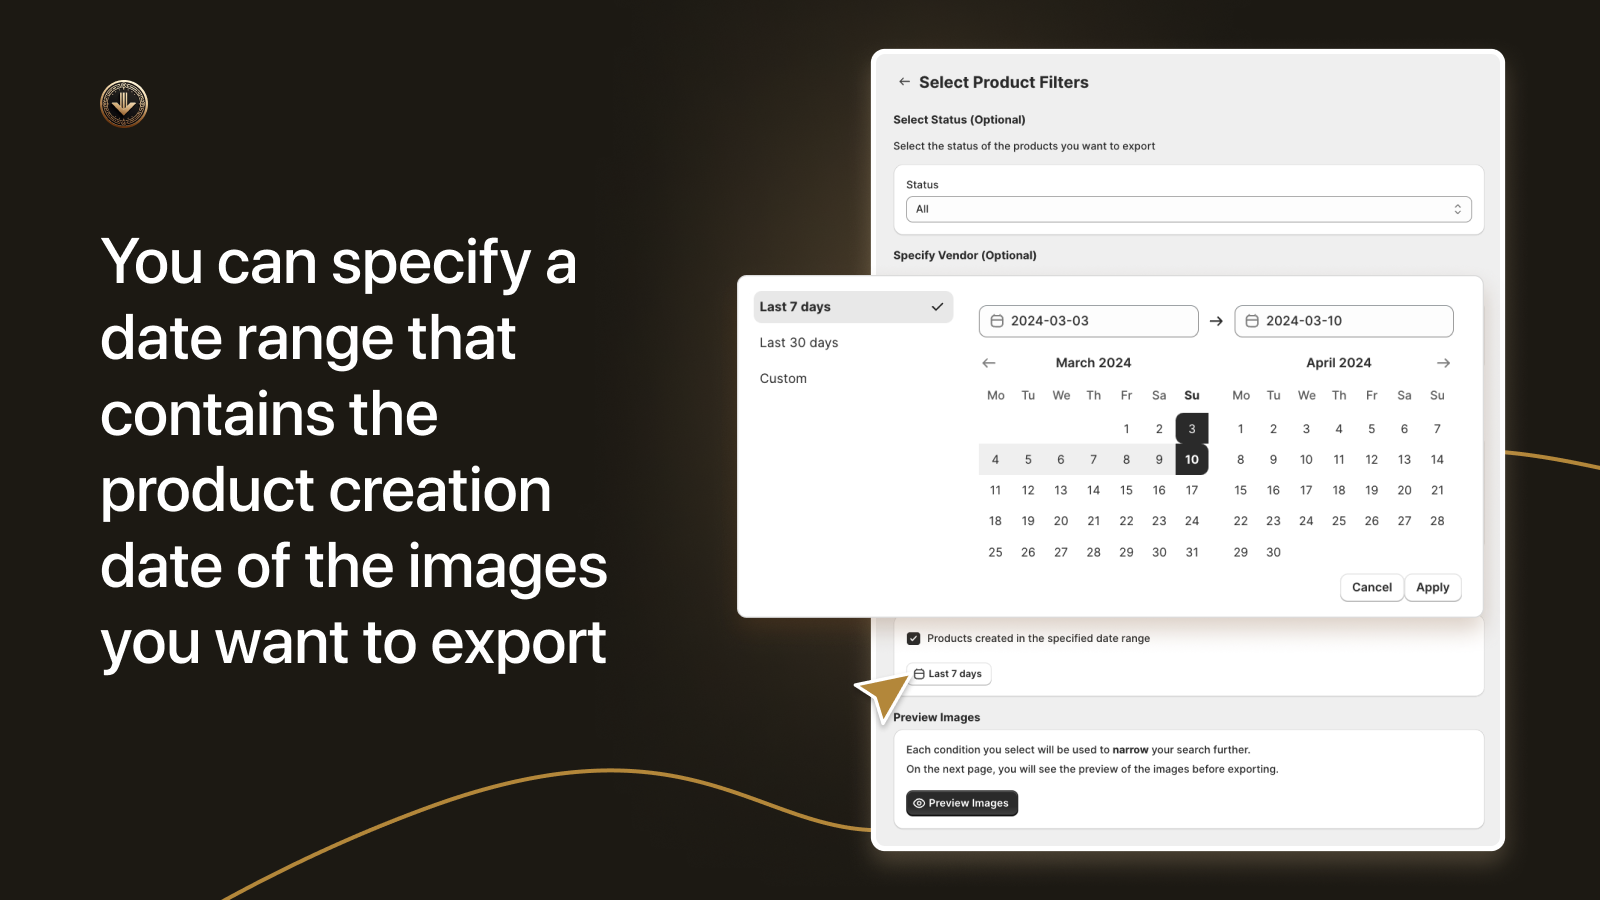 CS ‑ Export Product Images Screenshot